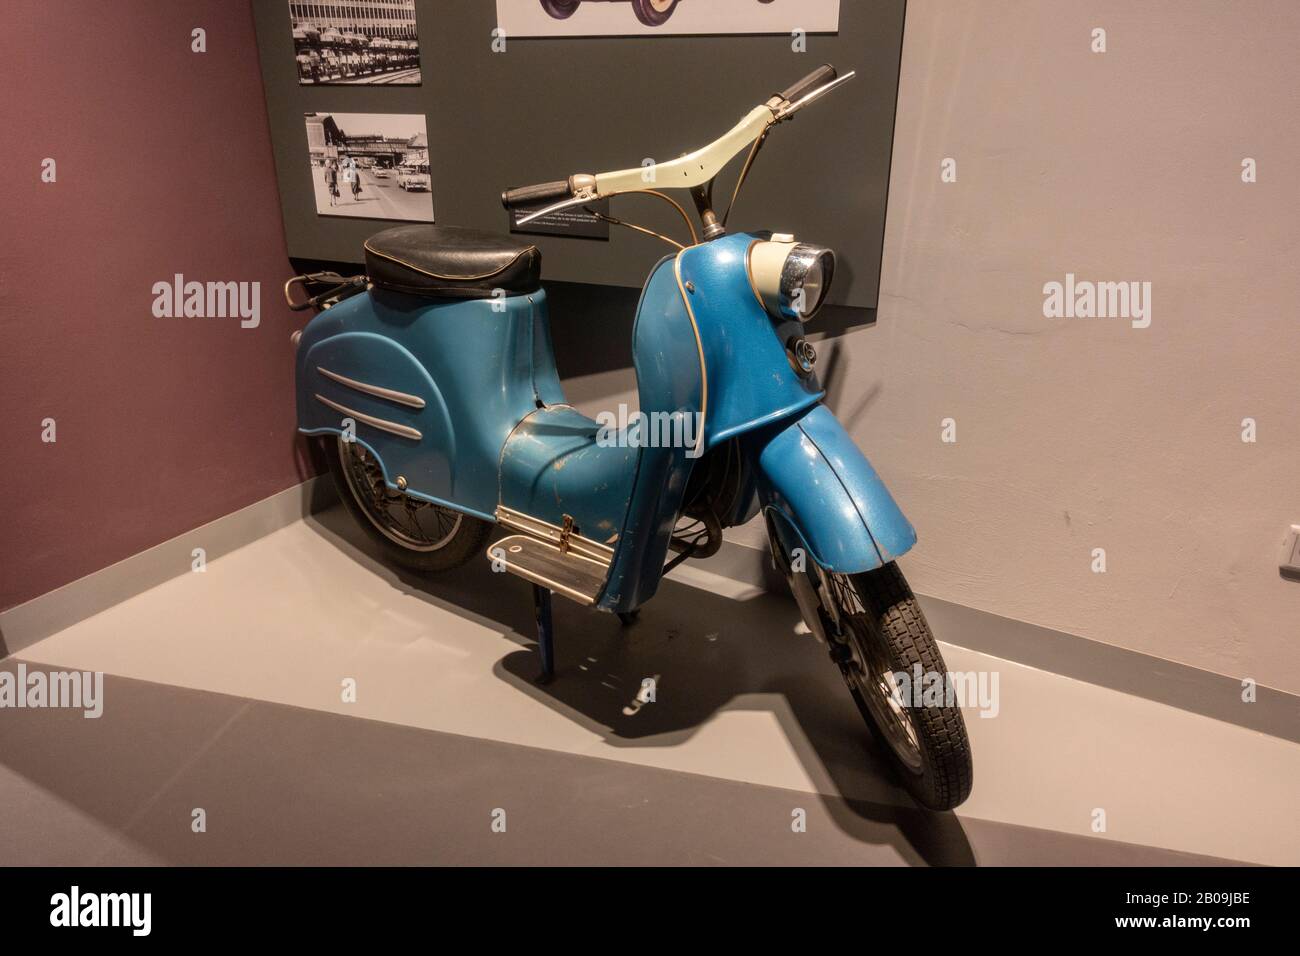 A Kleinkraftrad KR-50 moped (1960) the Nuremberg Transport Museum), Nuremberg, Germany. Stock Photo